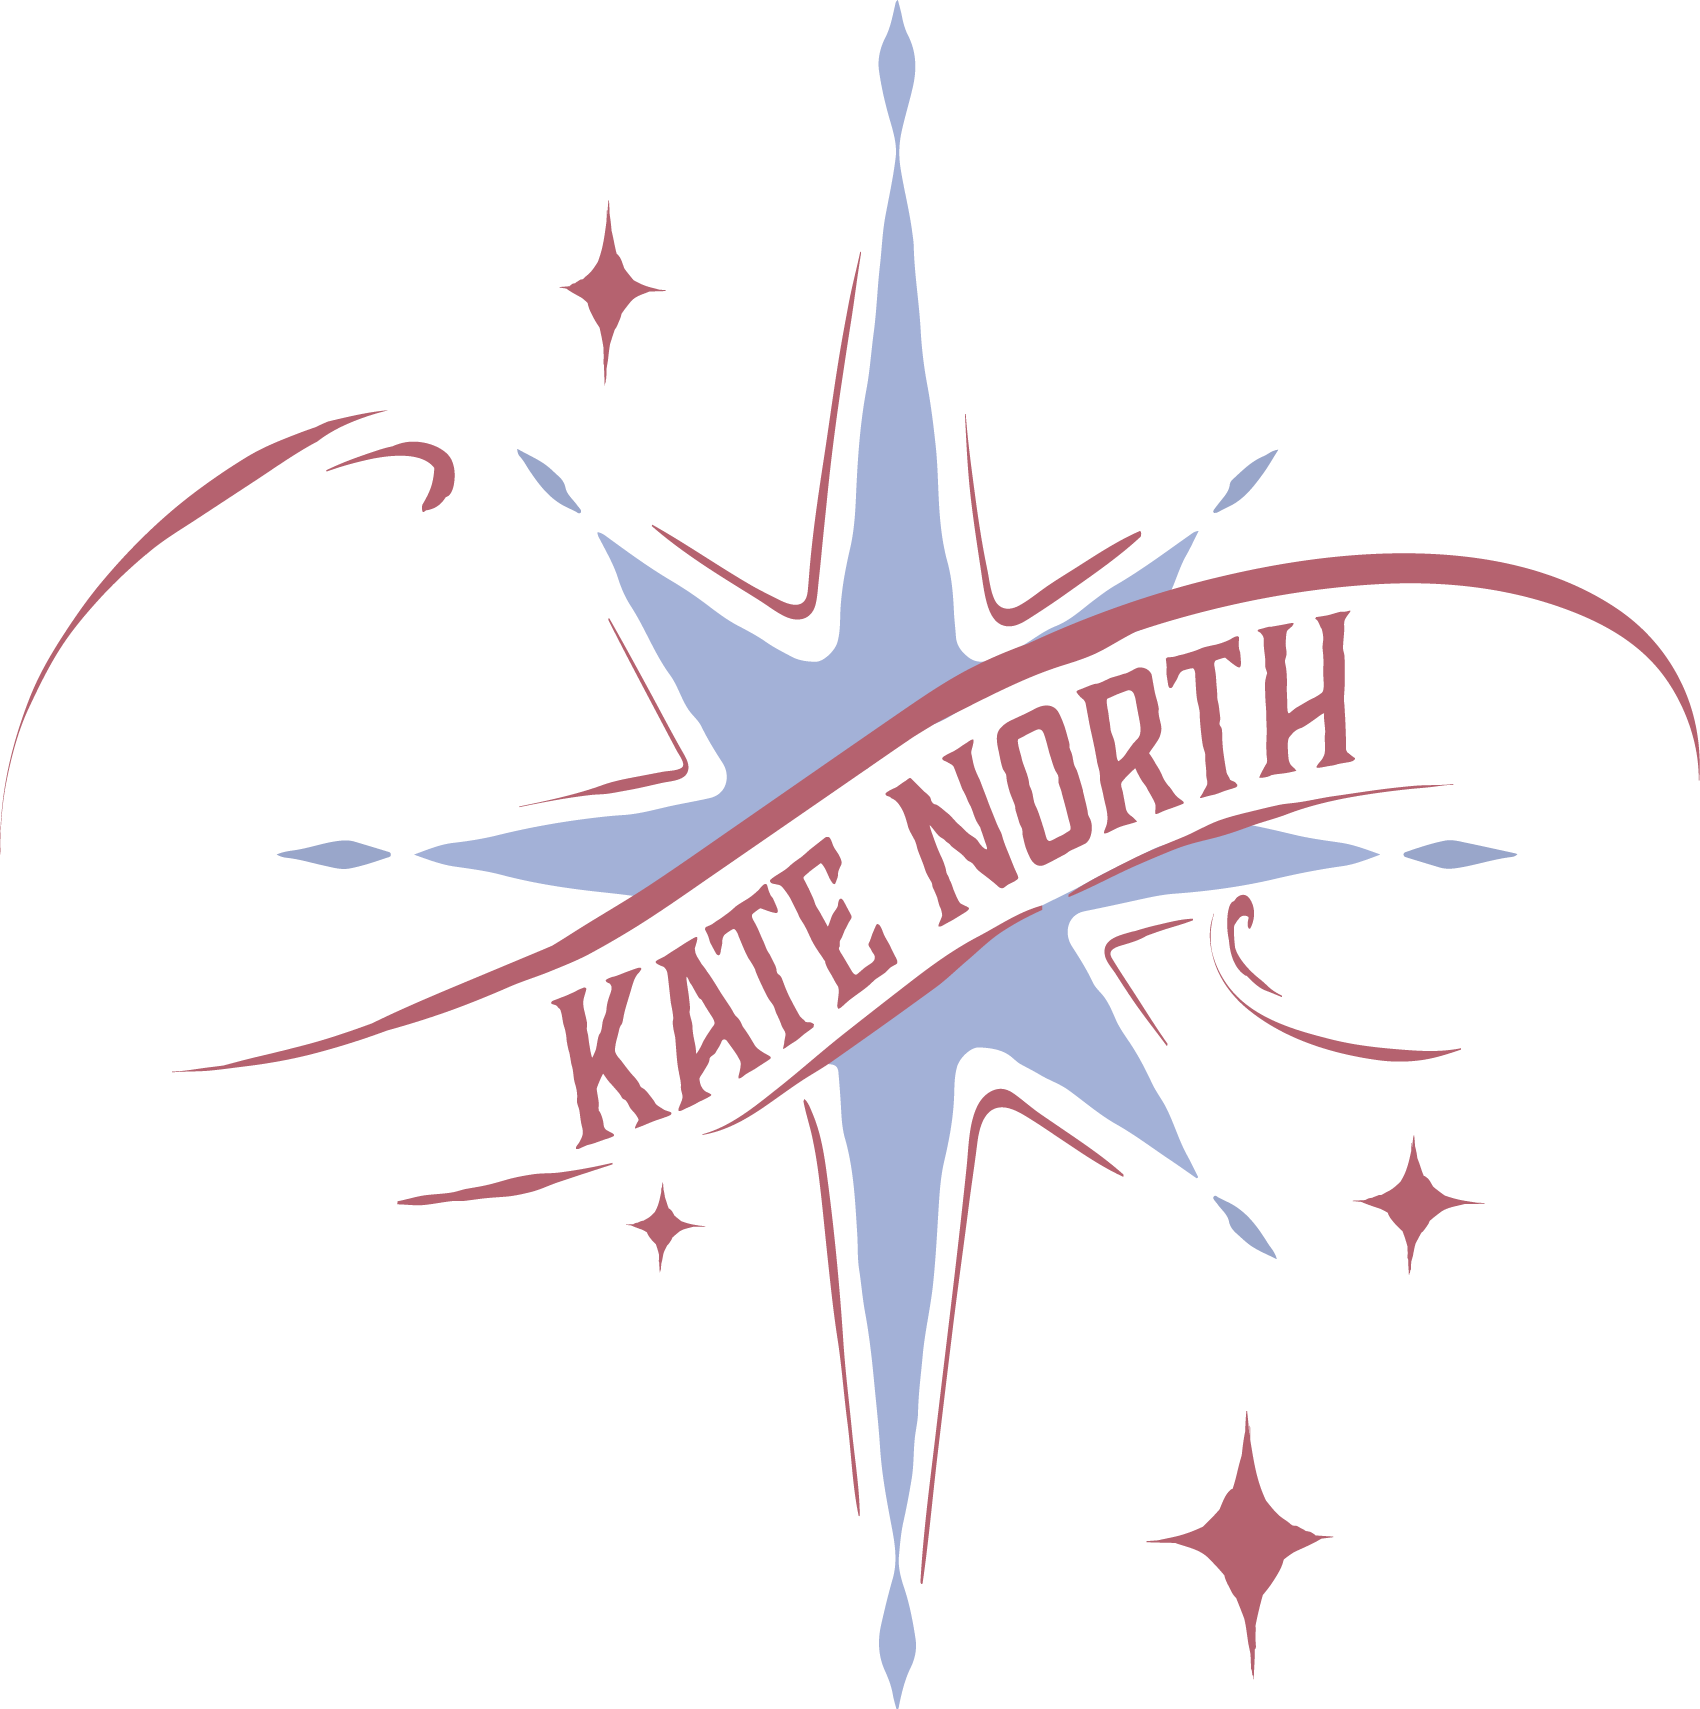 Kate North